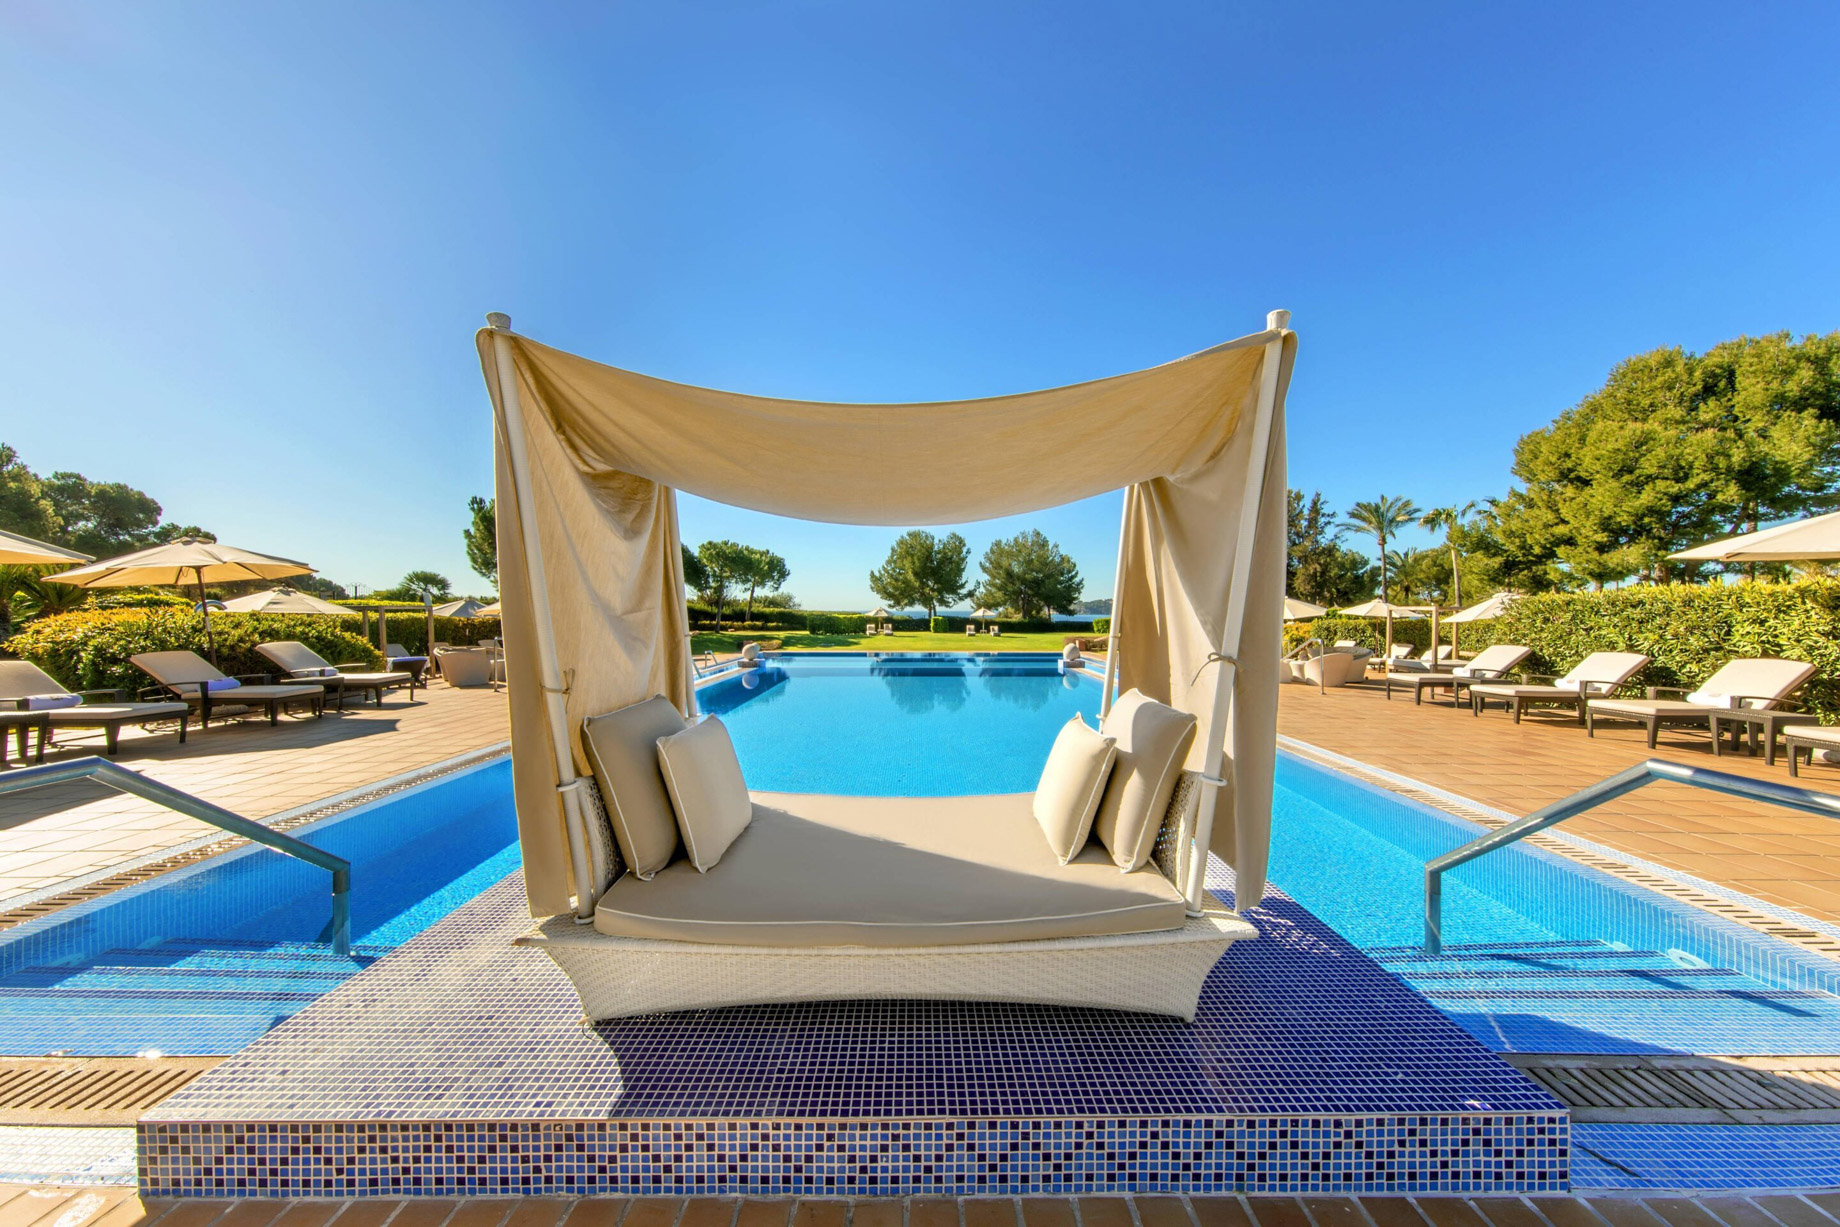 The St. Regis Mardavall Mallorca Resort – Palma de Mallorca, Spain – Pool Cabana